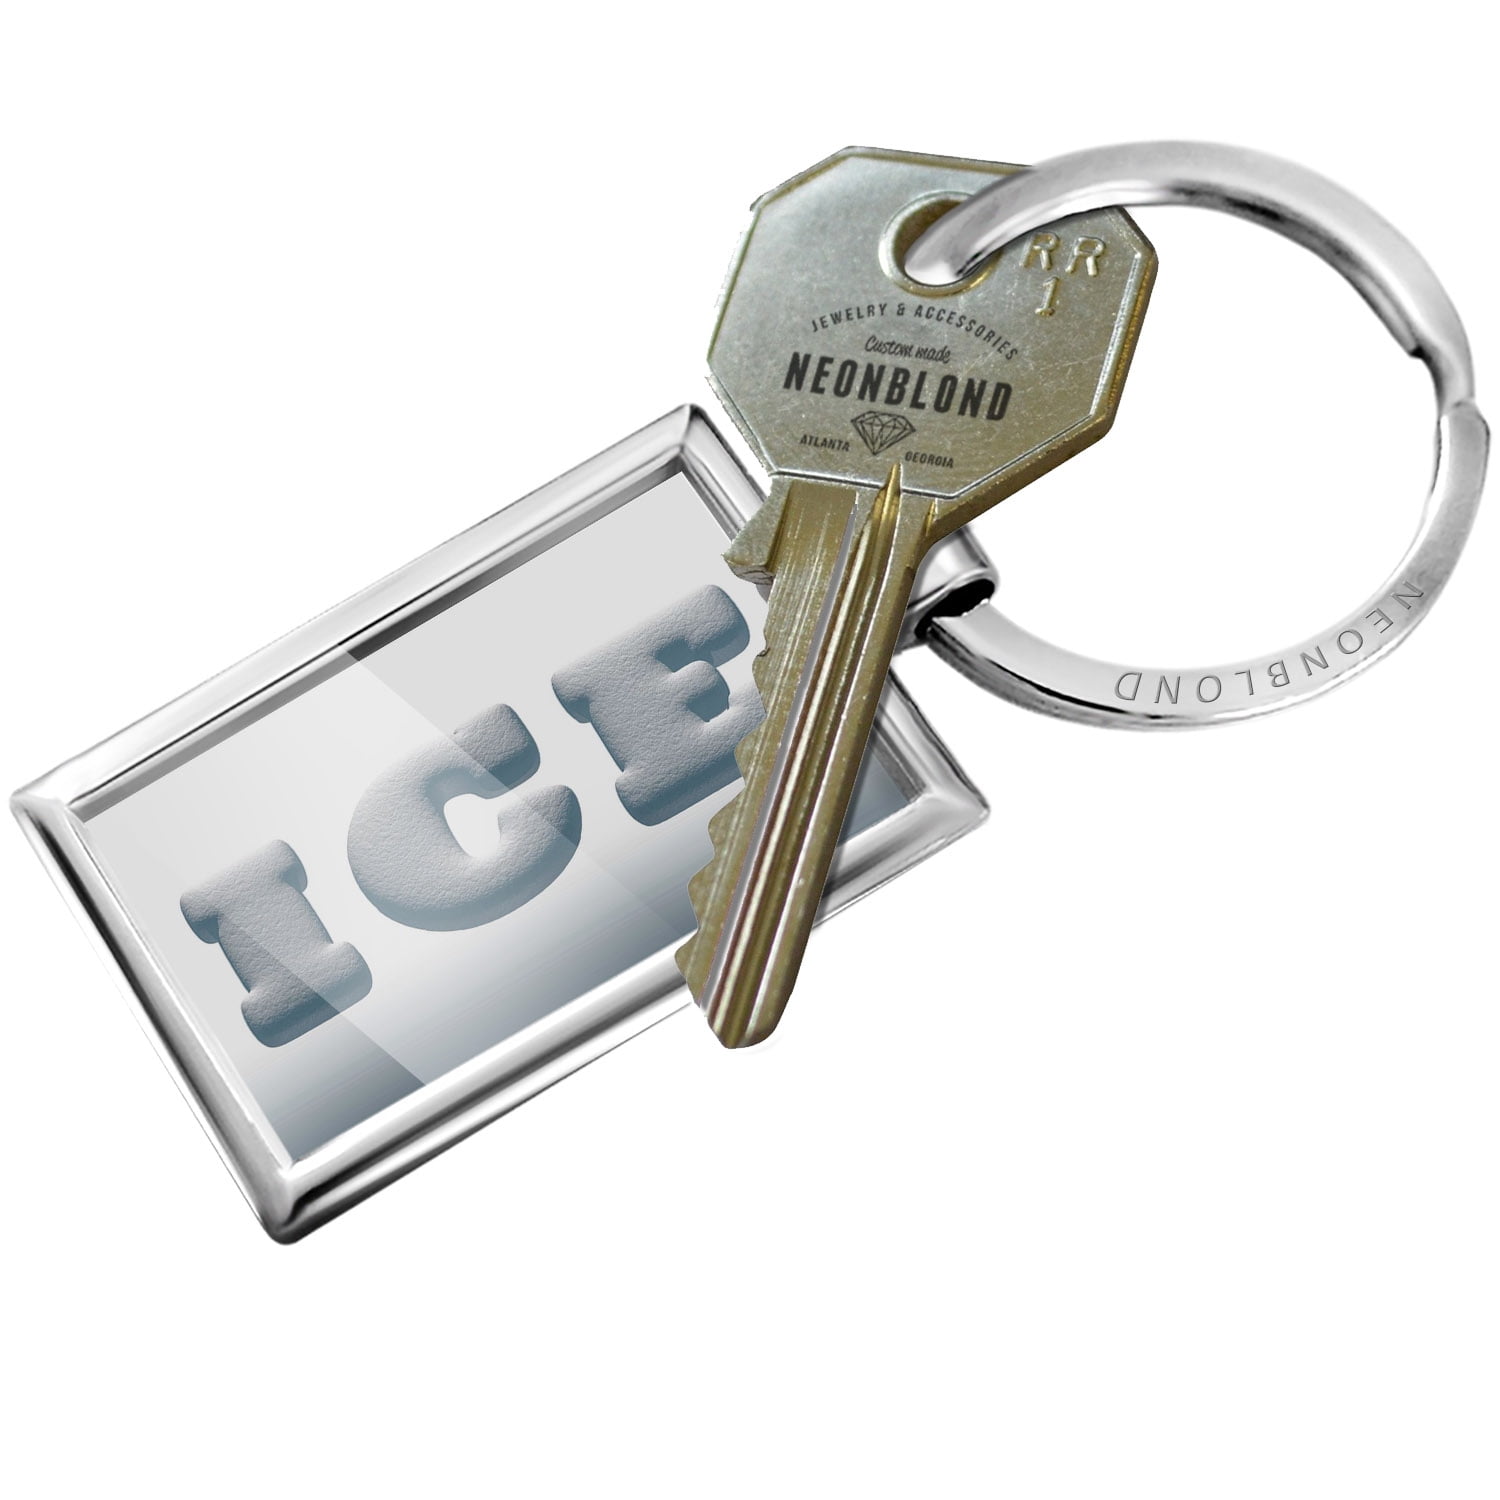 12  Neon Stretchy Keyrings locksmiths Key cutting item 